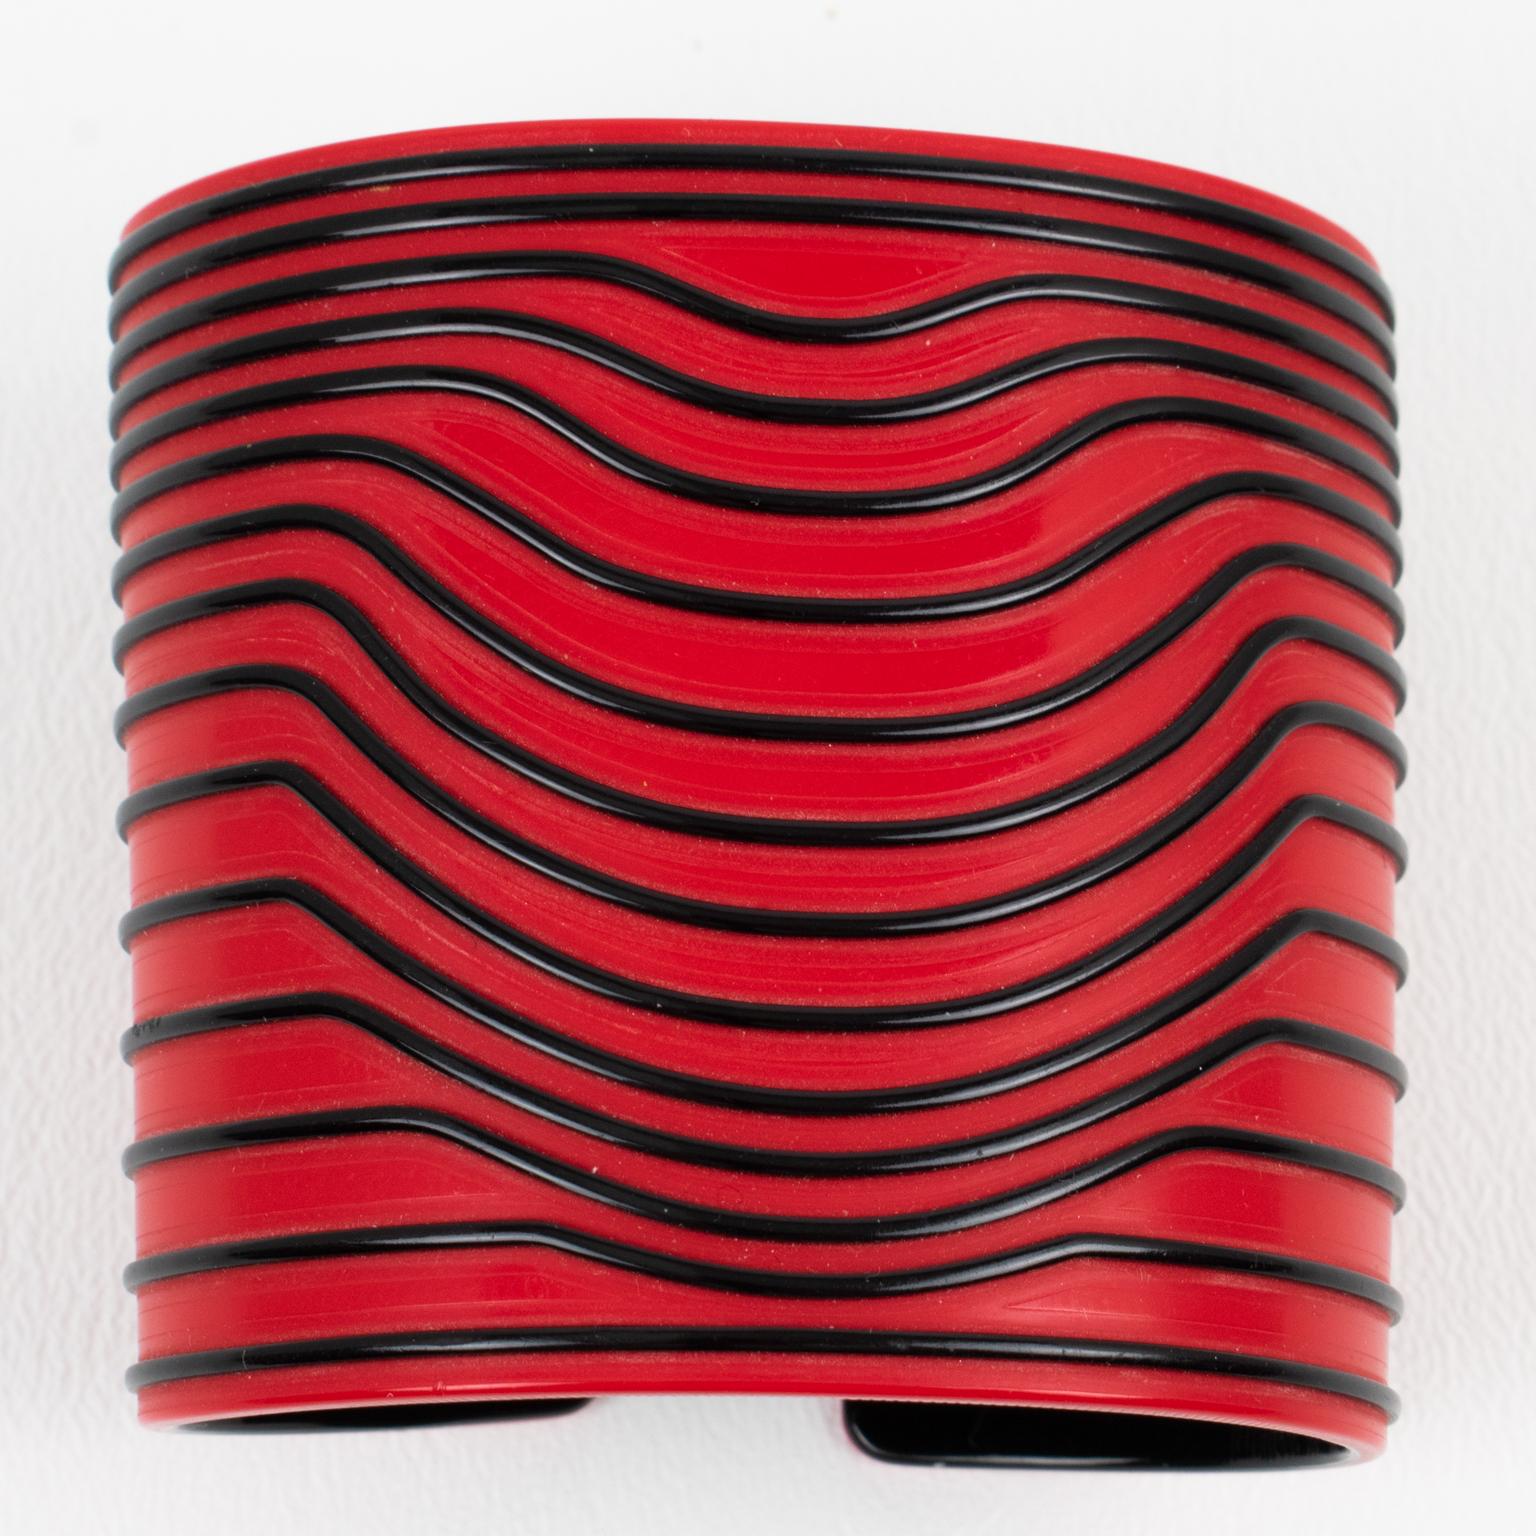 Jean Paul Gaultier Paris Red and Black Resin Cuff Bracelet Kinetic Effect 2